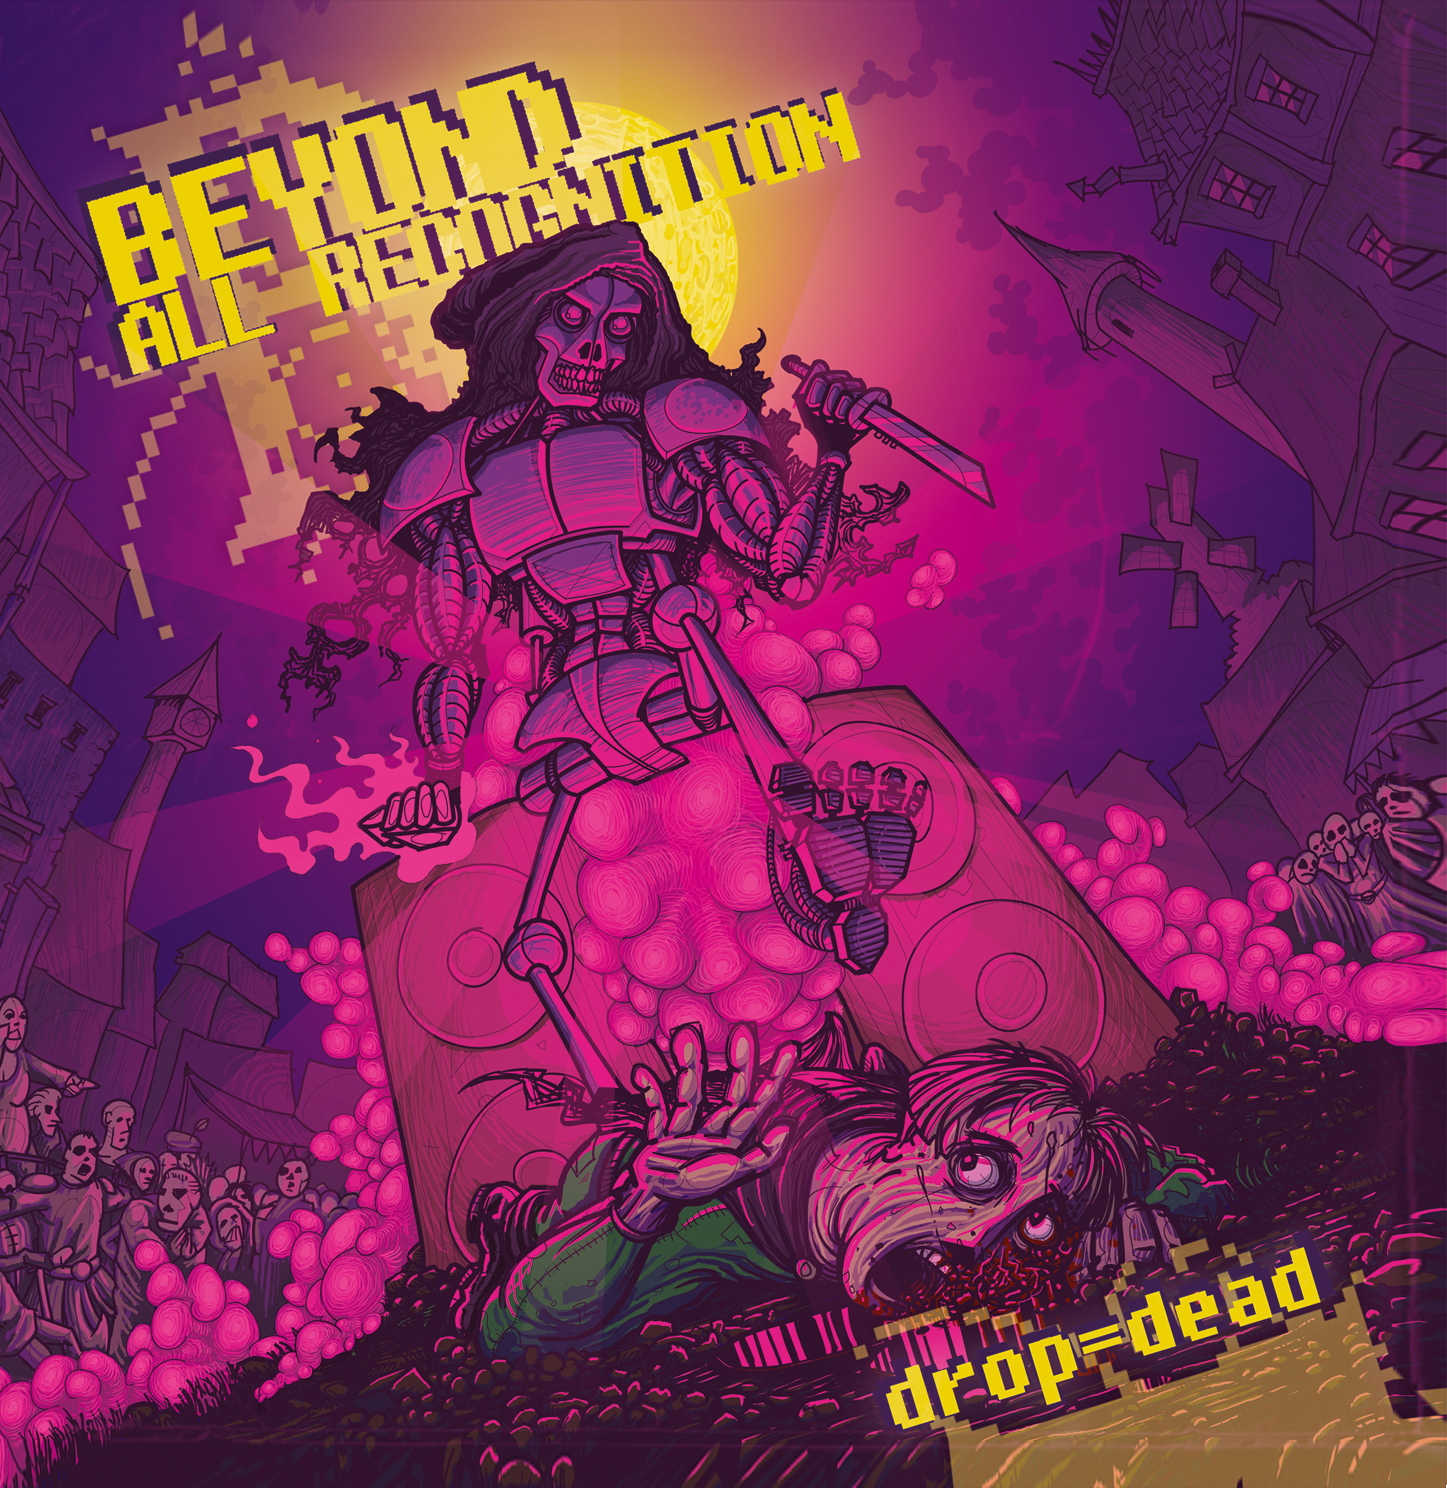 Beyond All Recognition DROP=DEAD (2012)